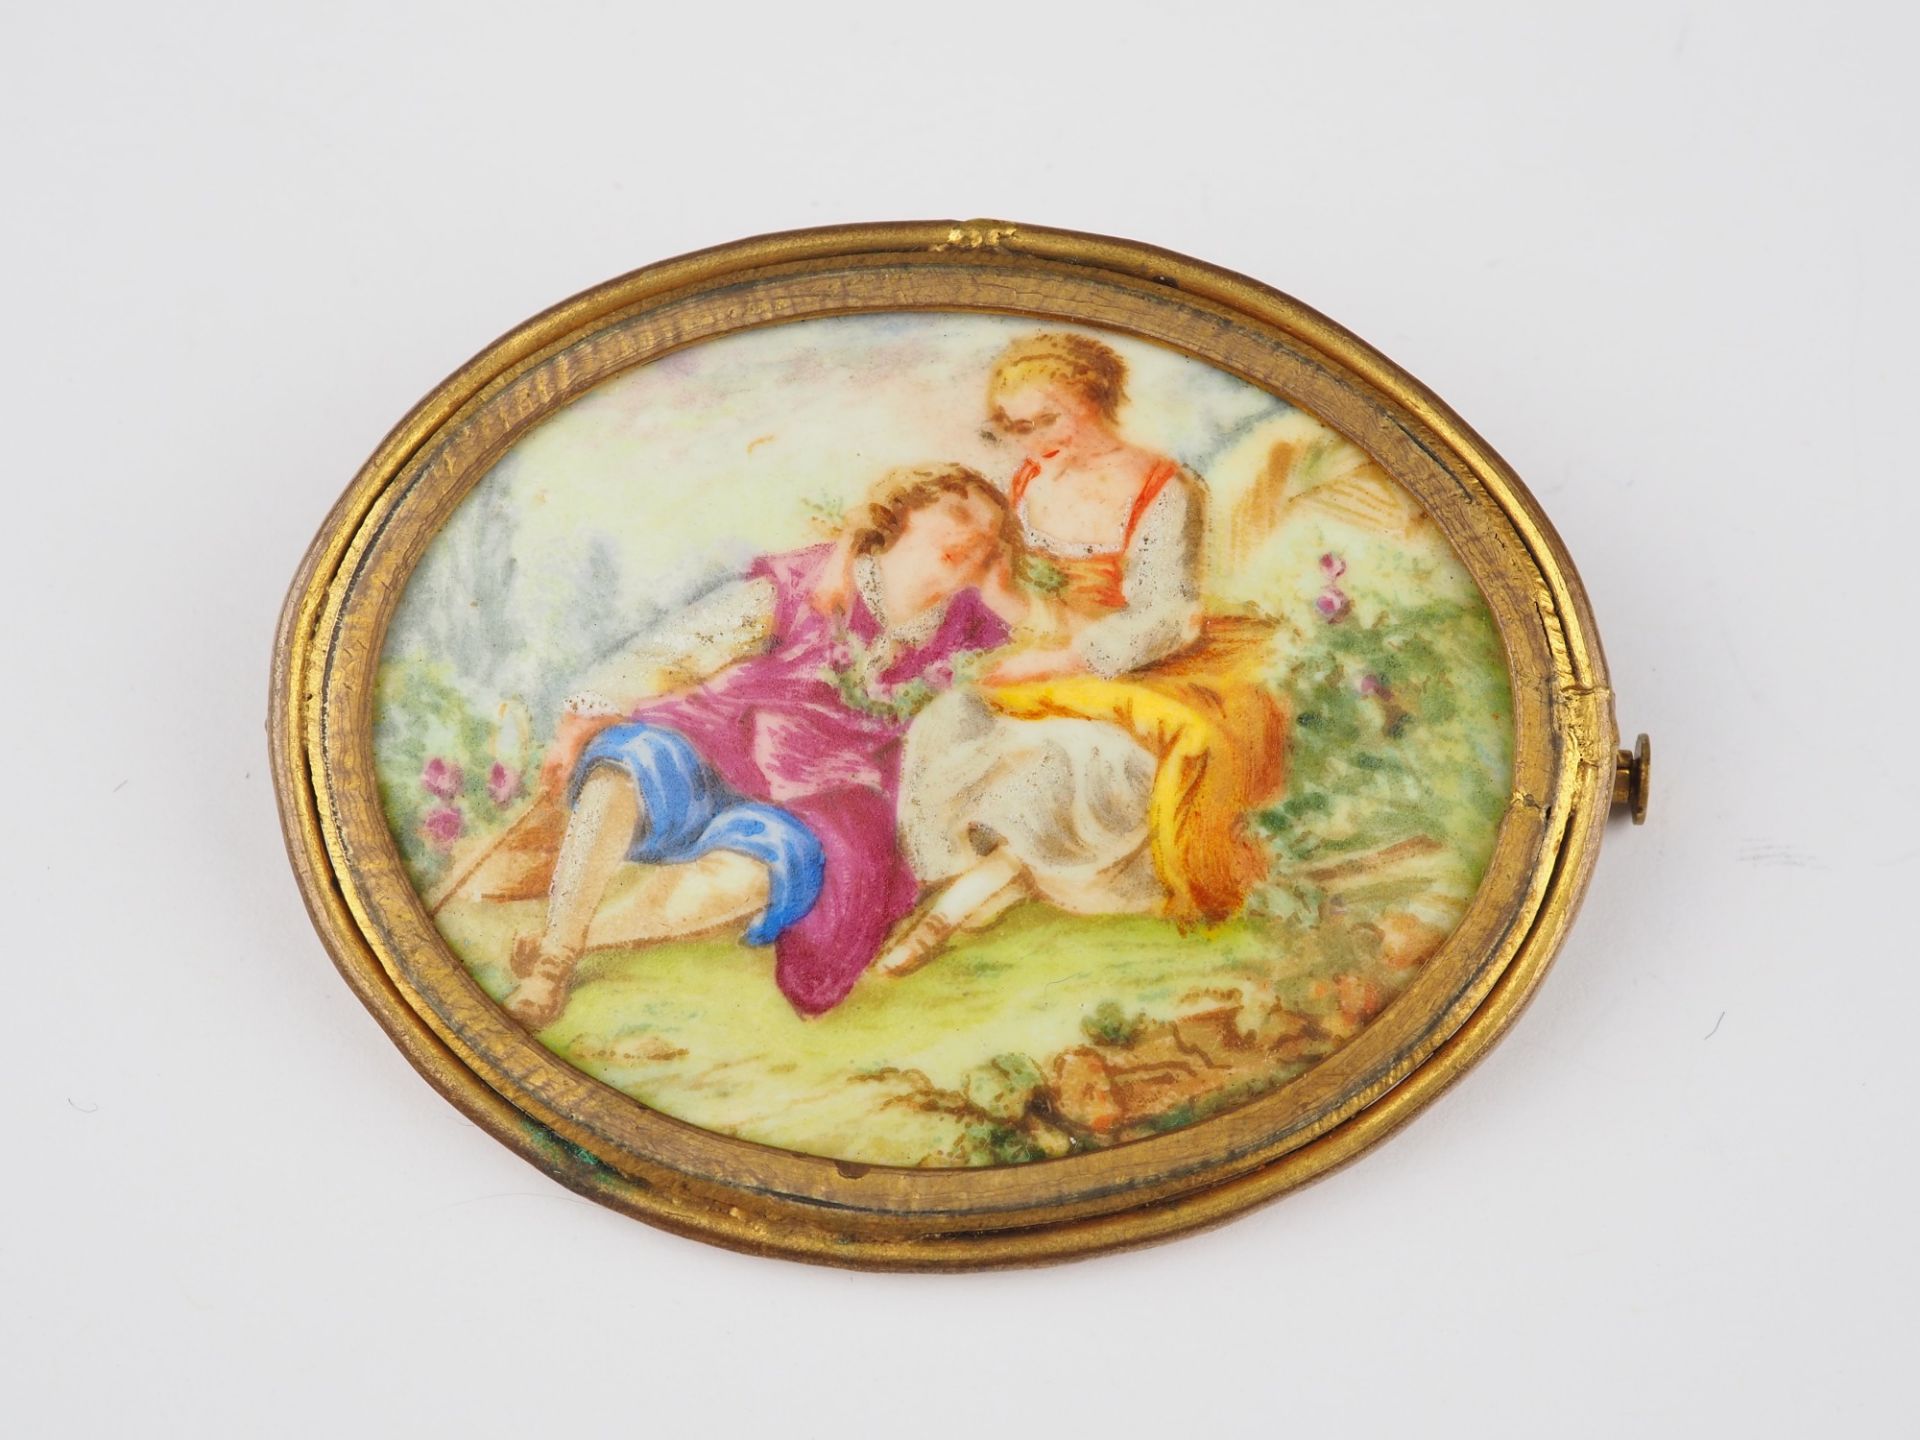 Porcelain brooch in Biedermeier style, beginning of 19th century.